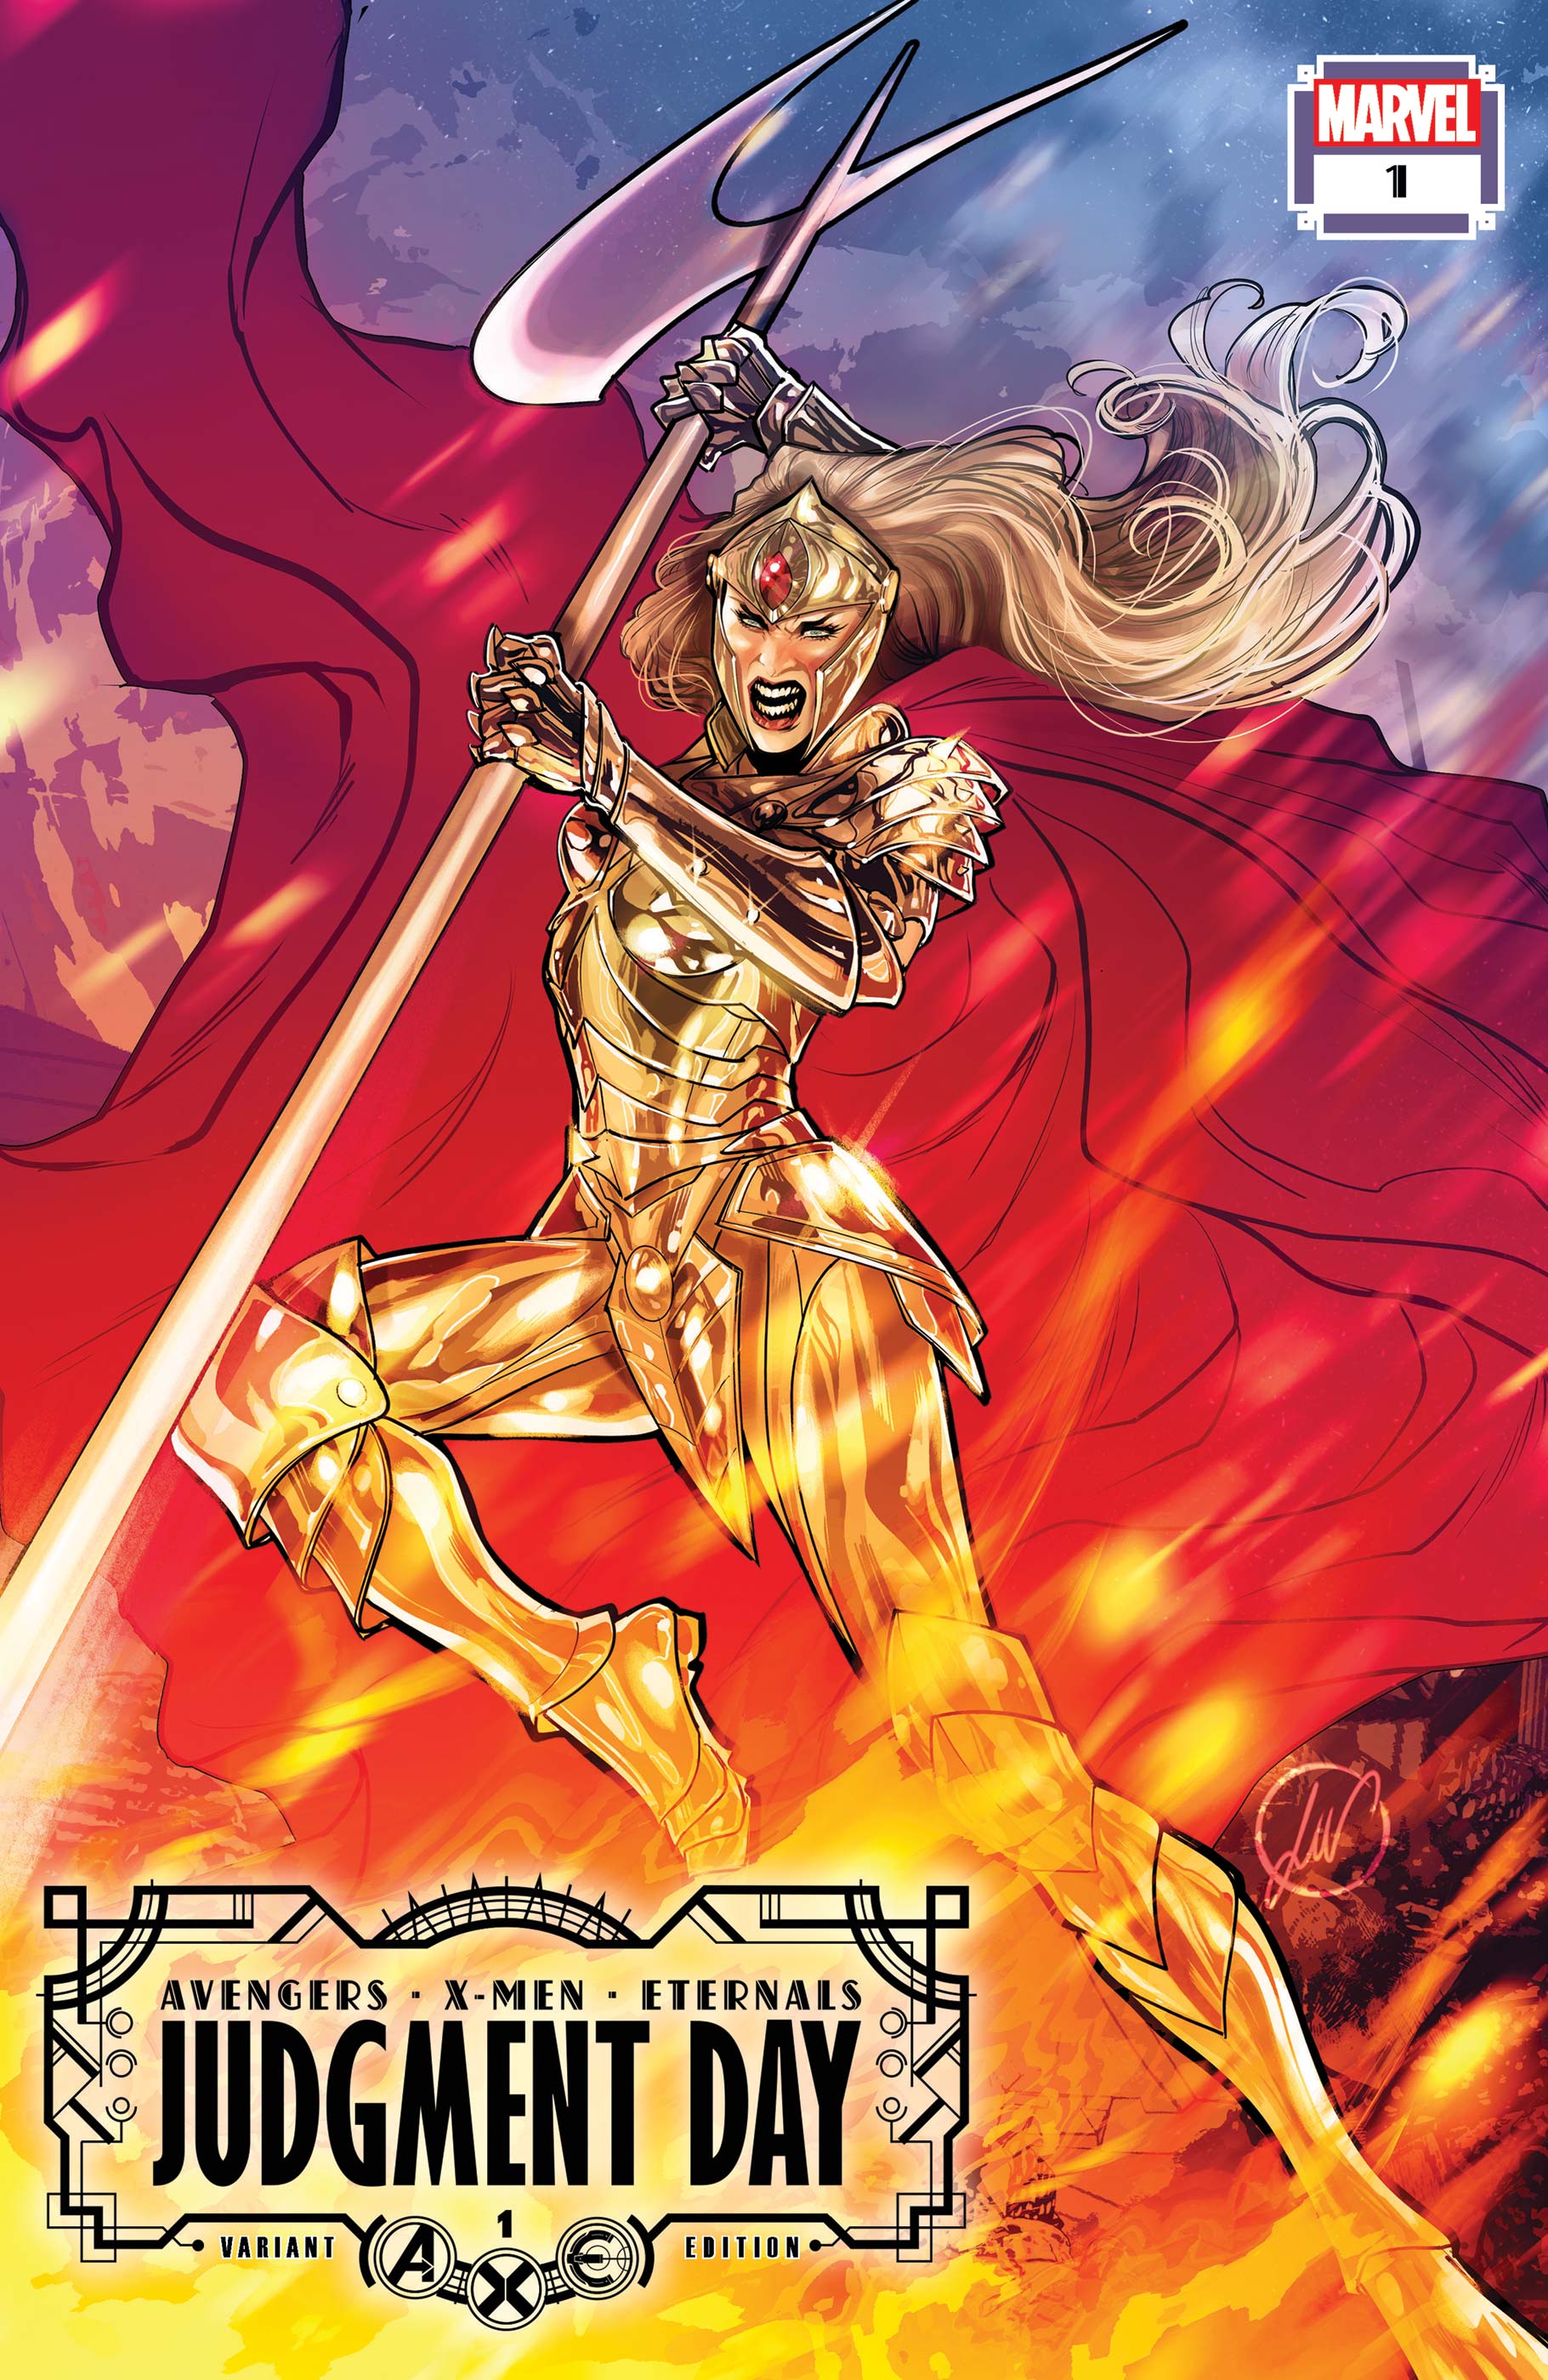 A.X.E.: Starfox Vol 1 1, Marvel Database